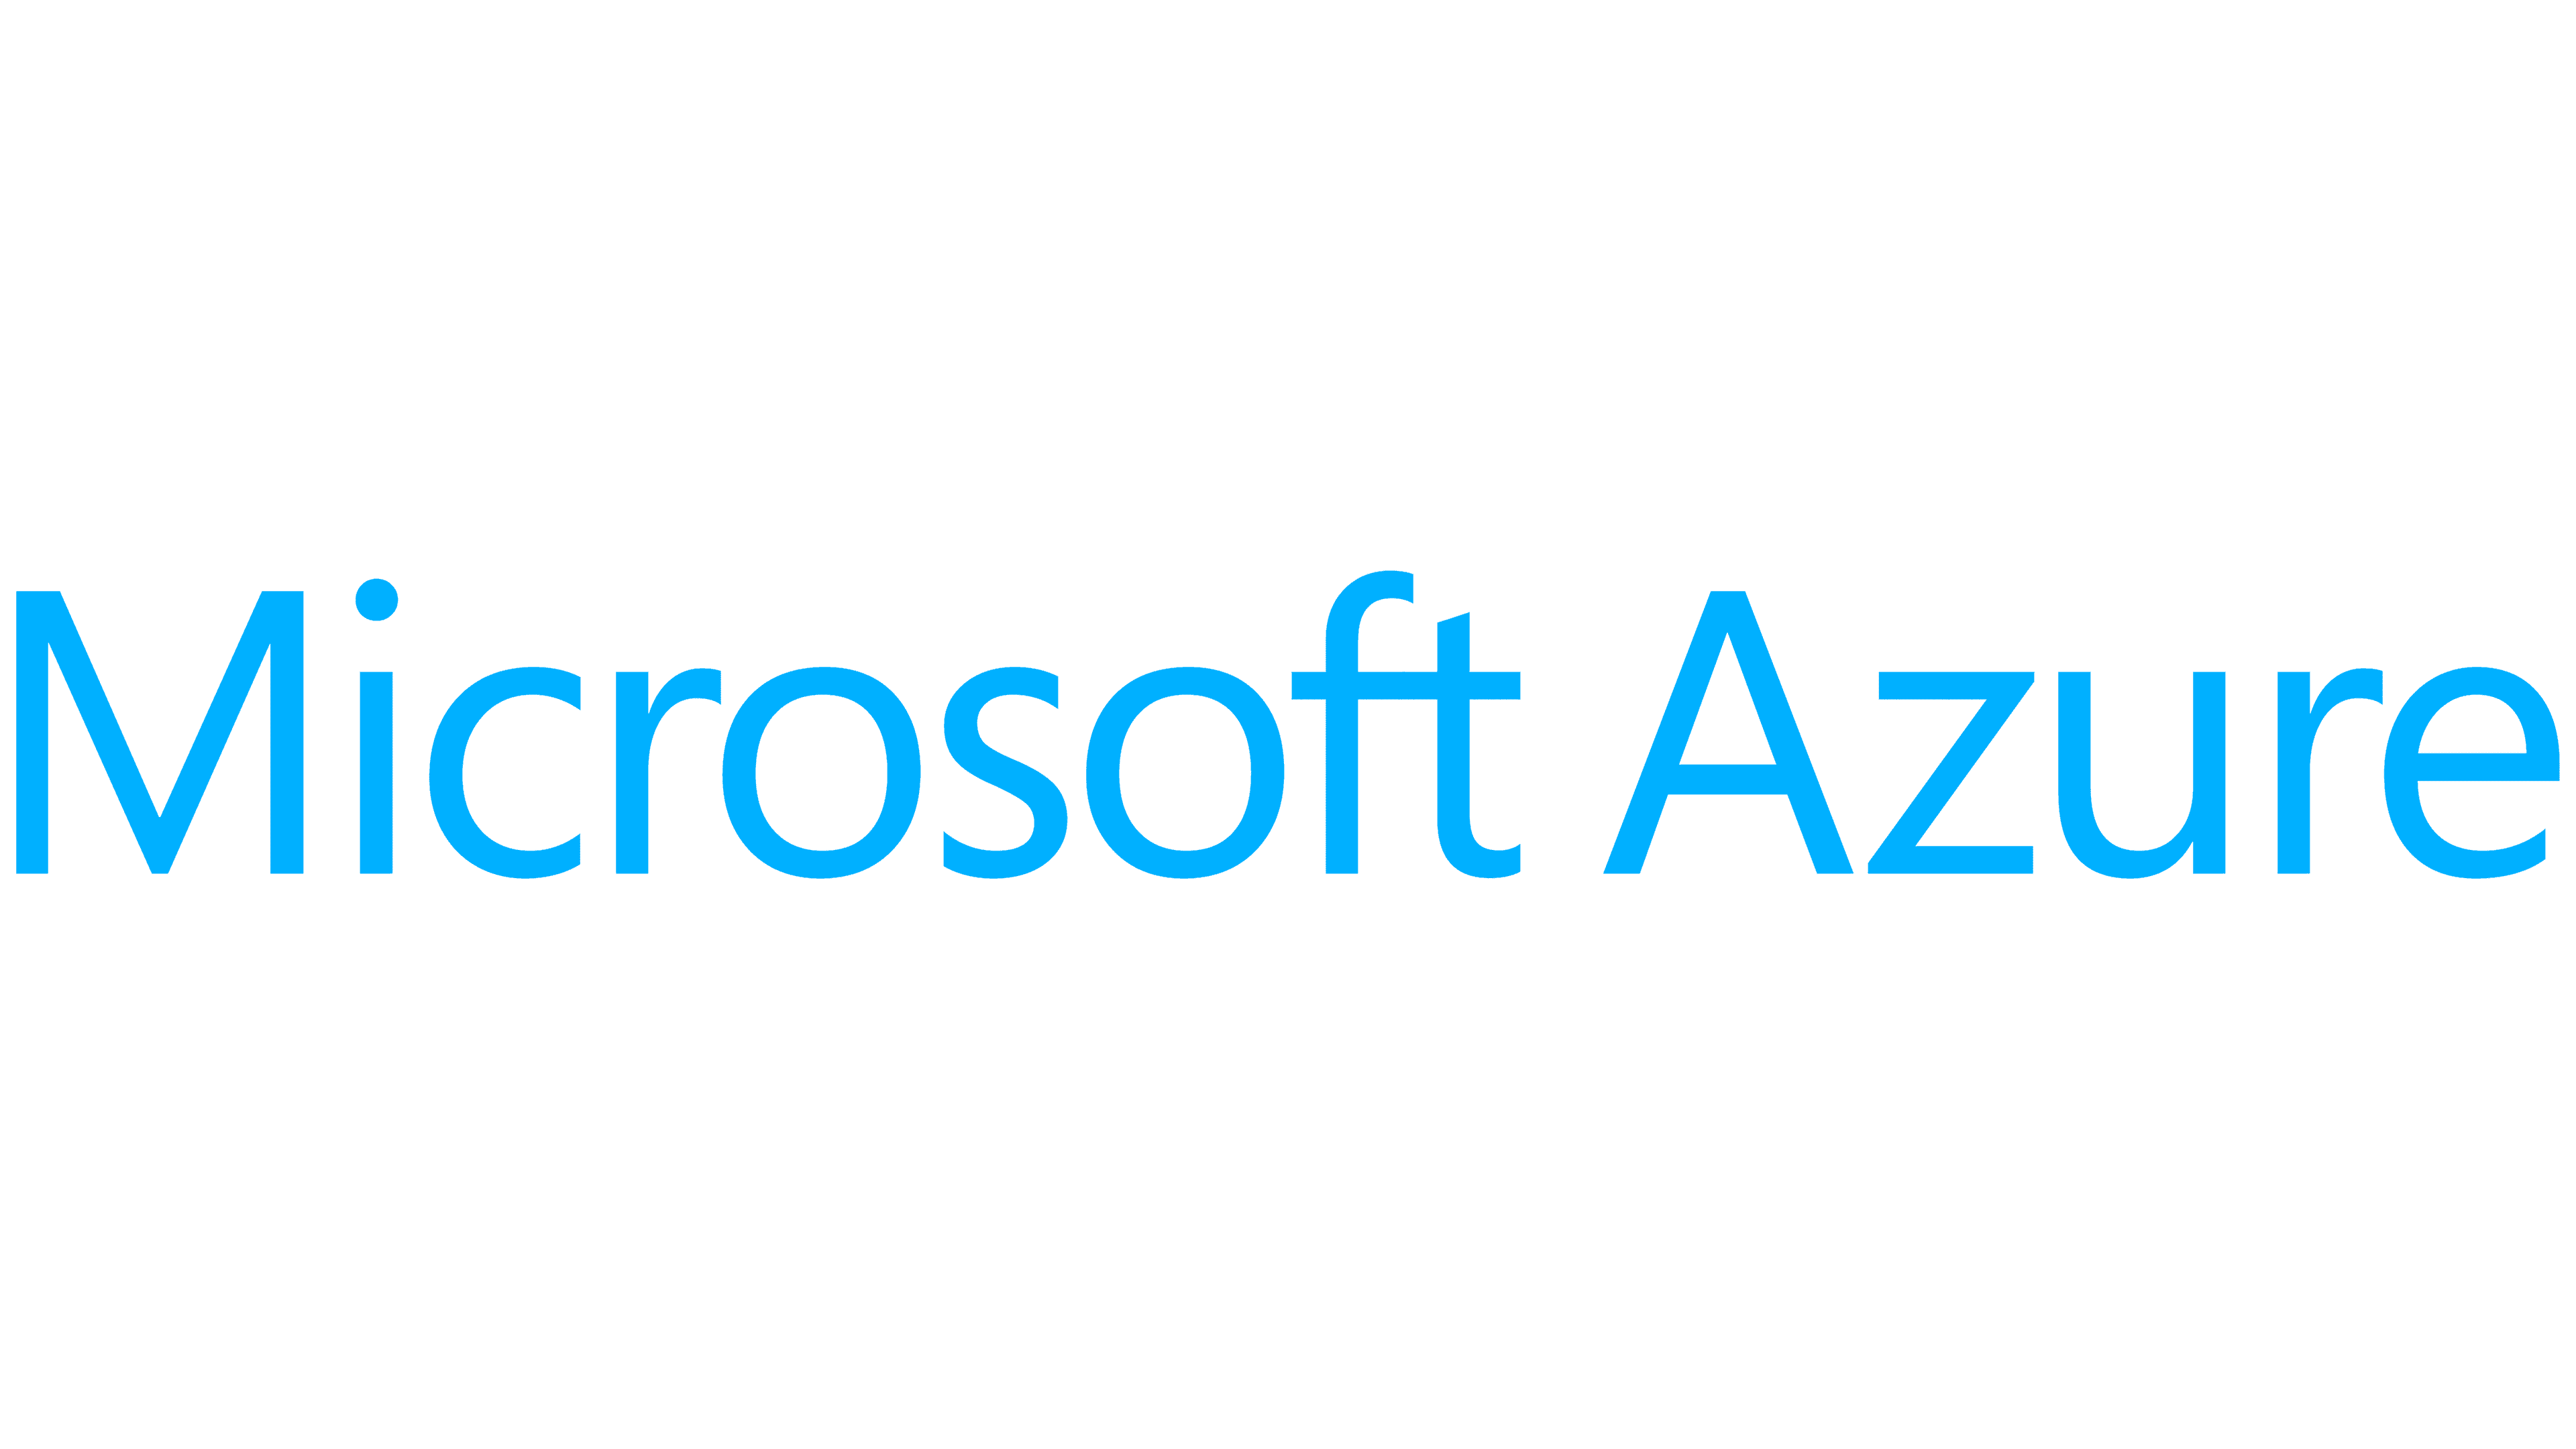 Microsoft Azure Logo 2014 20171684240144